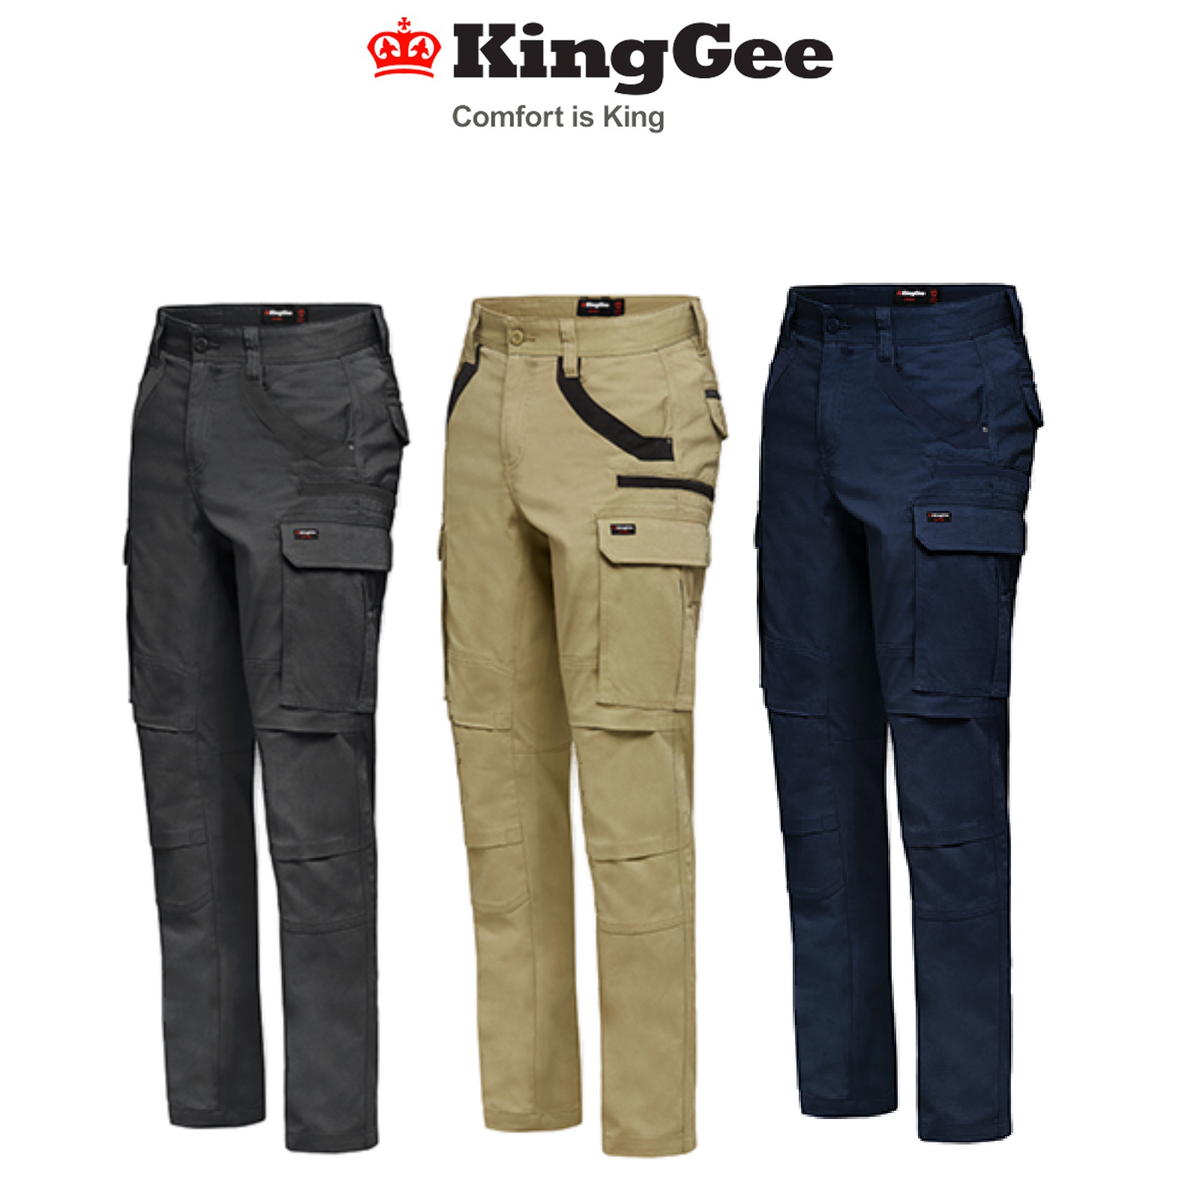 KingGee Mens Tradies Stretch Cargo Pants Durable Cotton Tough Safety Work K69860